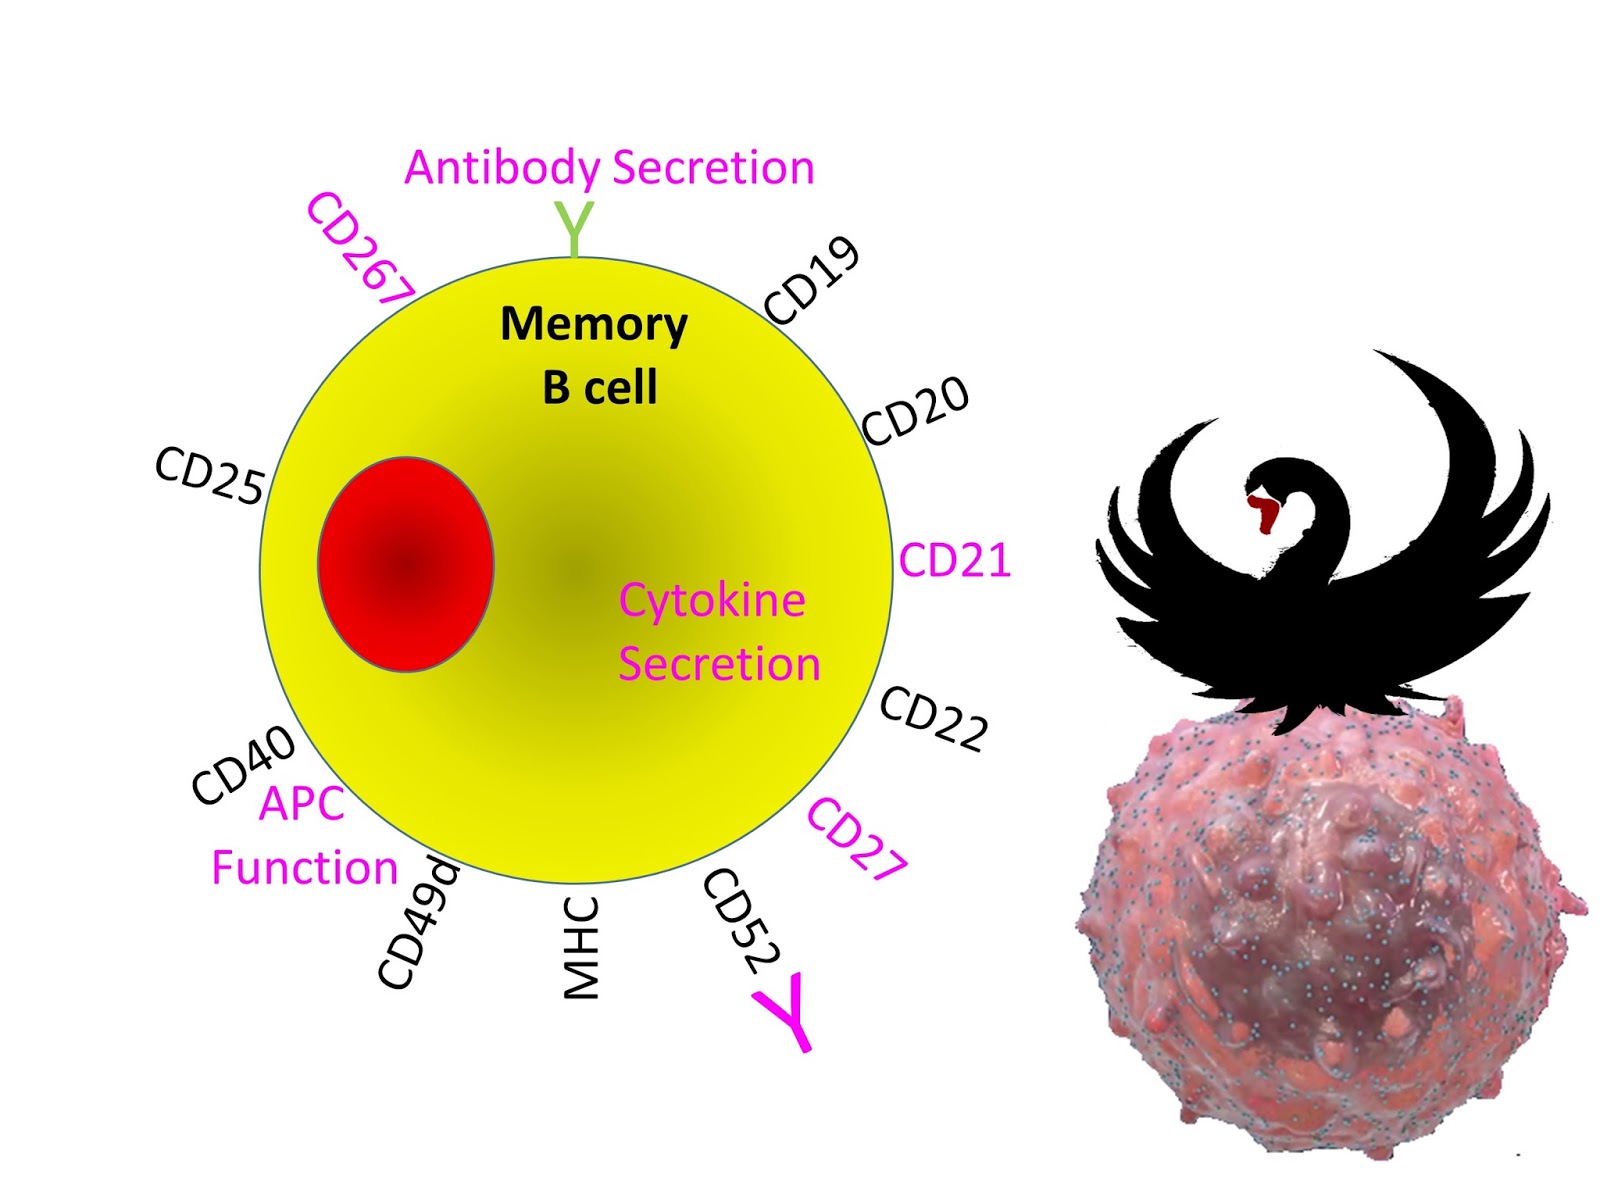 Cd20 Antibodies Deplete Ebv Multiple Sclerosis Research Blog